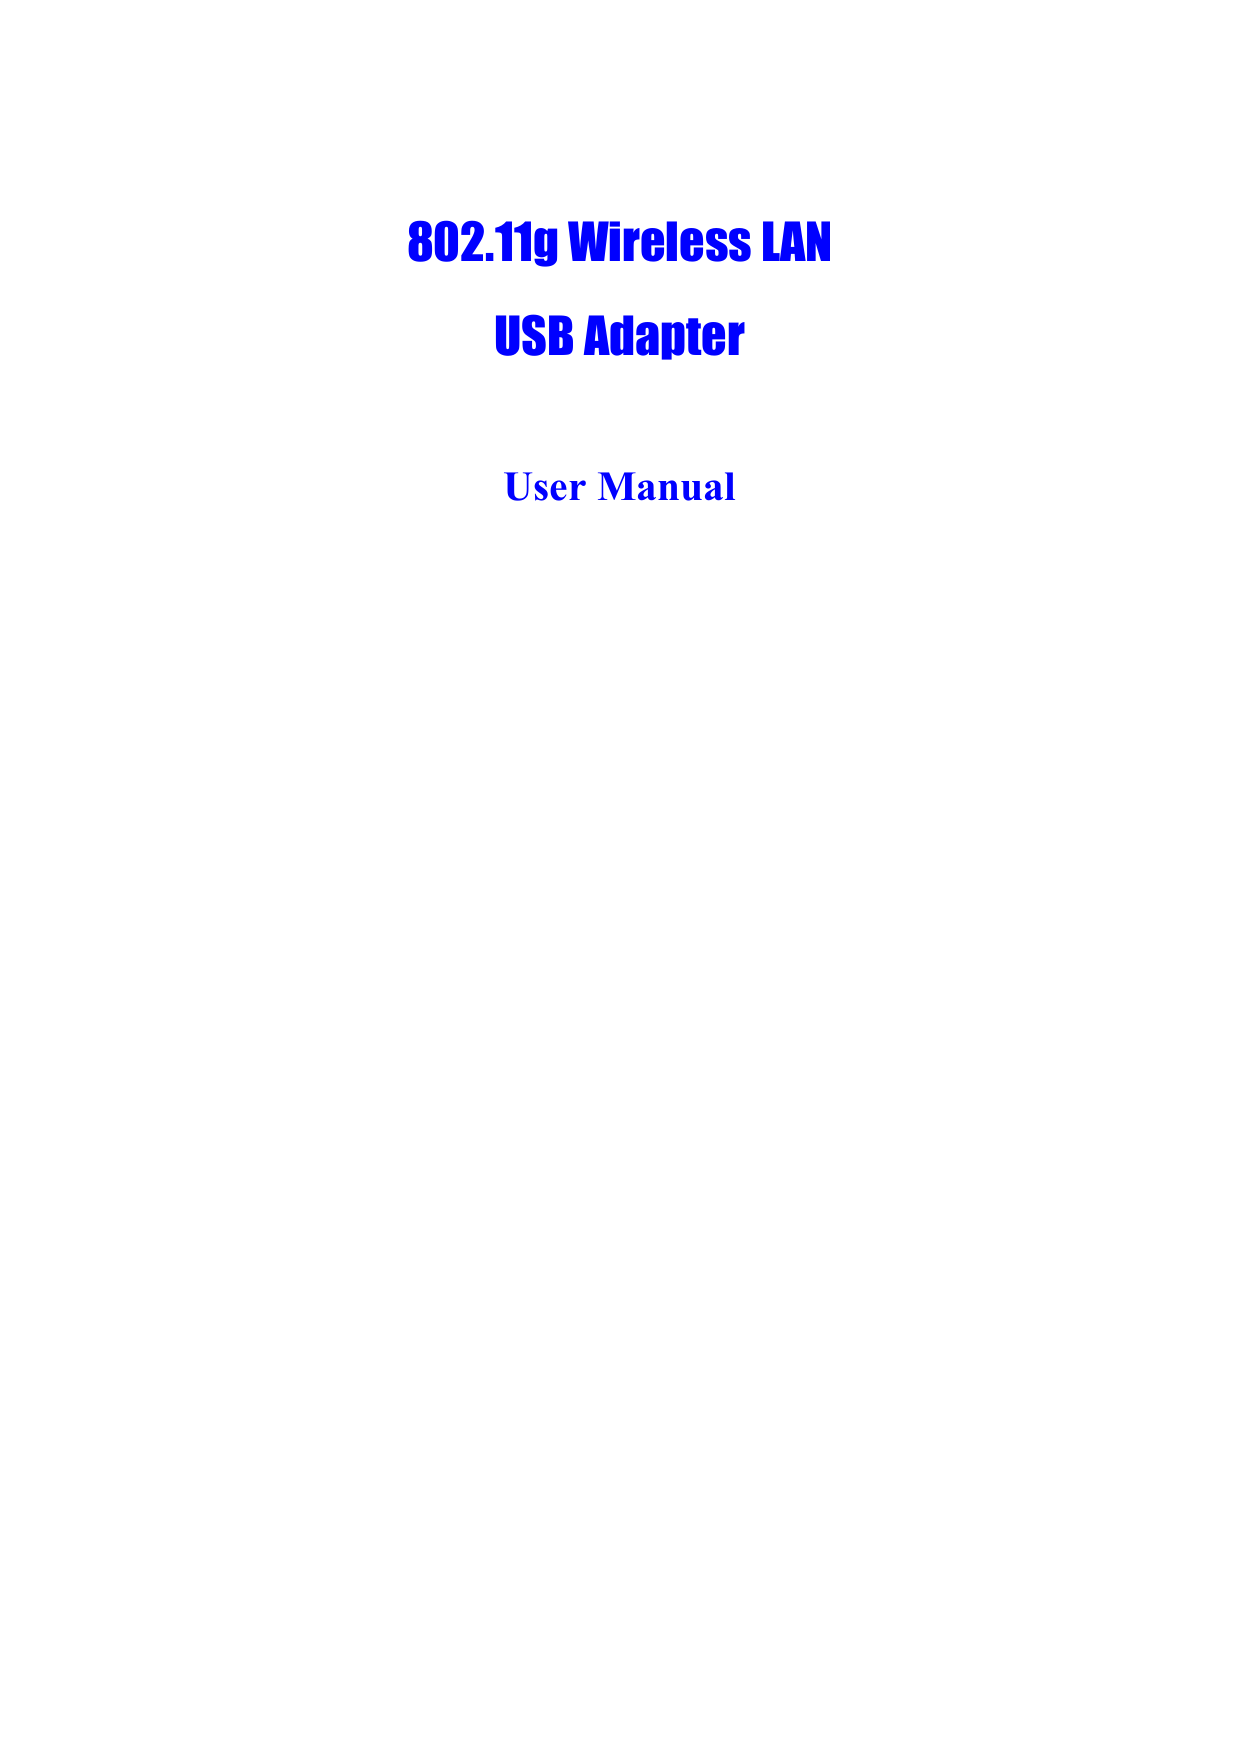    802.11g Wireless LAN USB Adapter  User Manual 